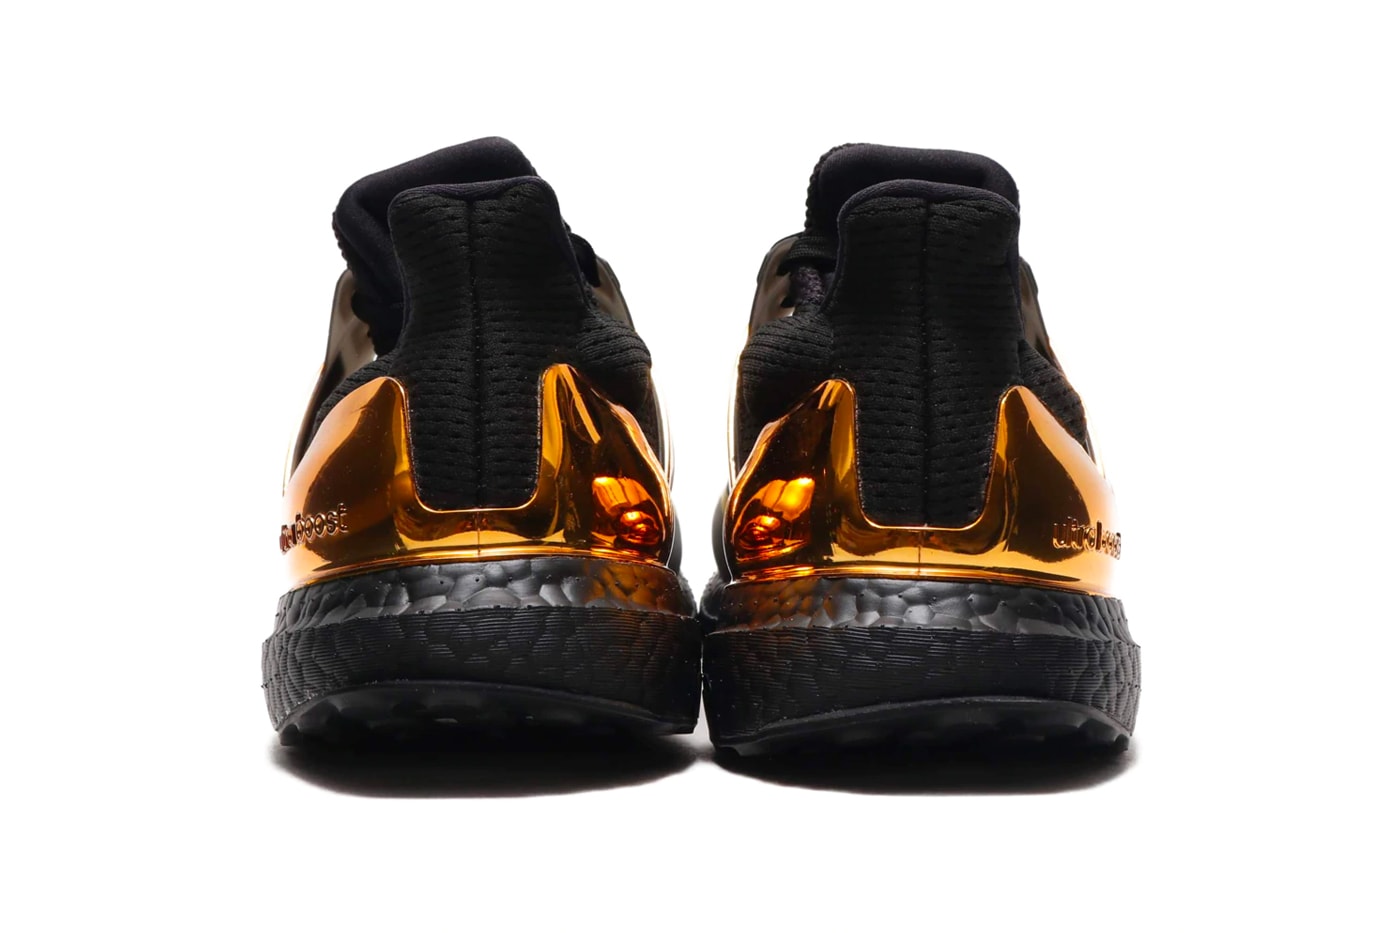 adidas UltraBOOST goldmet metallic gold black continental fall winter 2019 running shoes eg8102